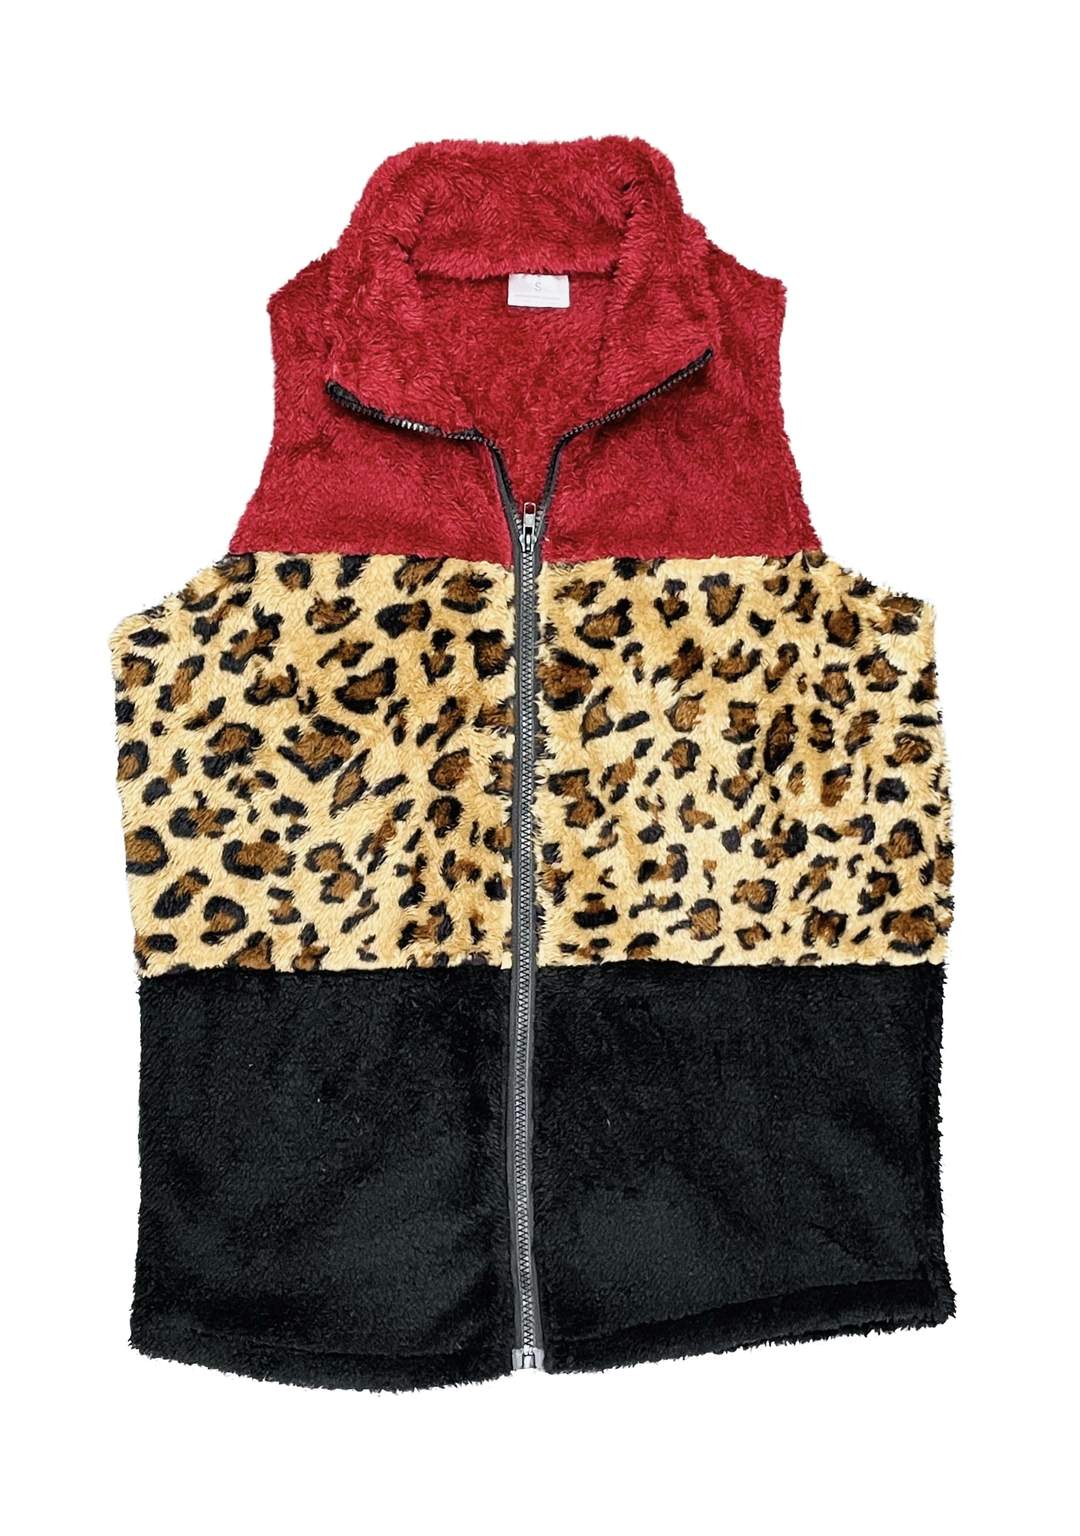 Color Block Vest- Cheetah/Burgundy (mommy & me match!)